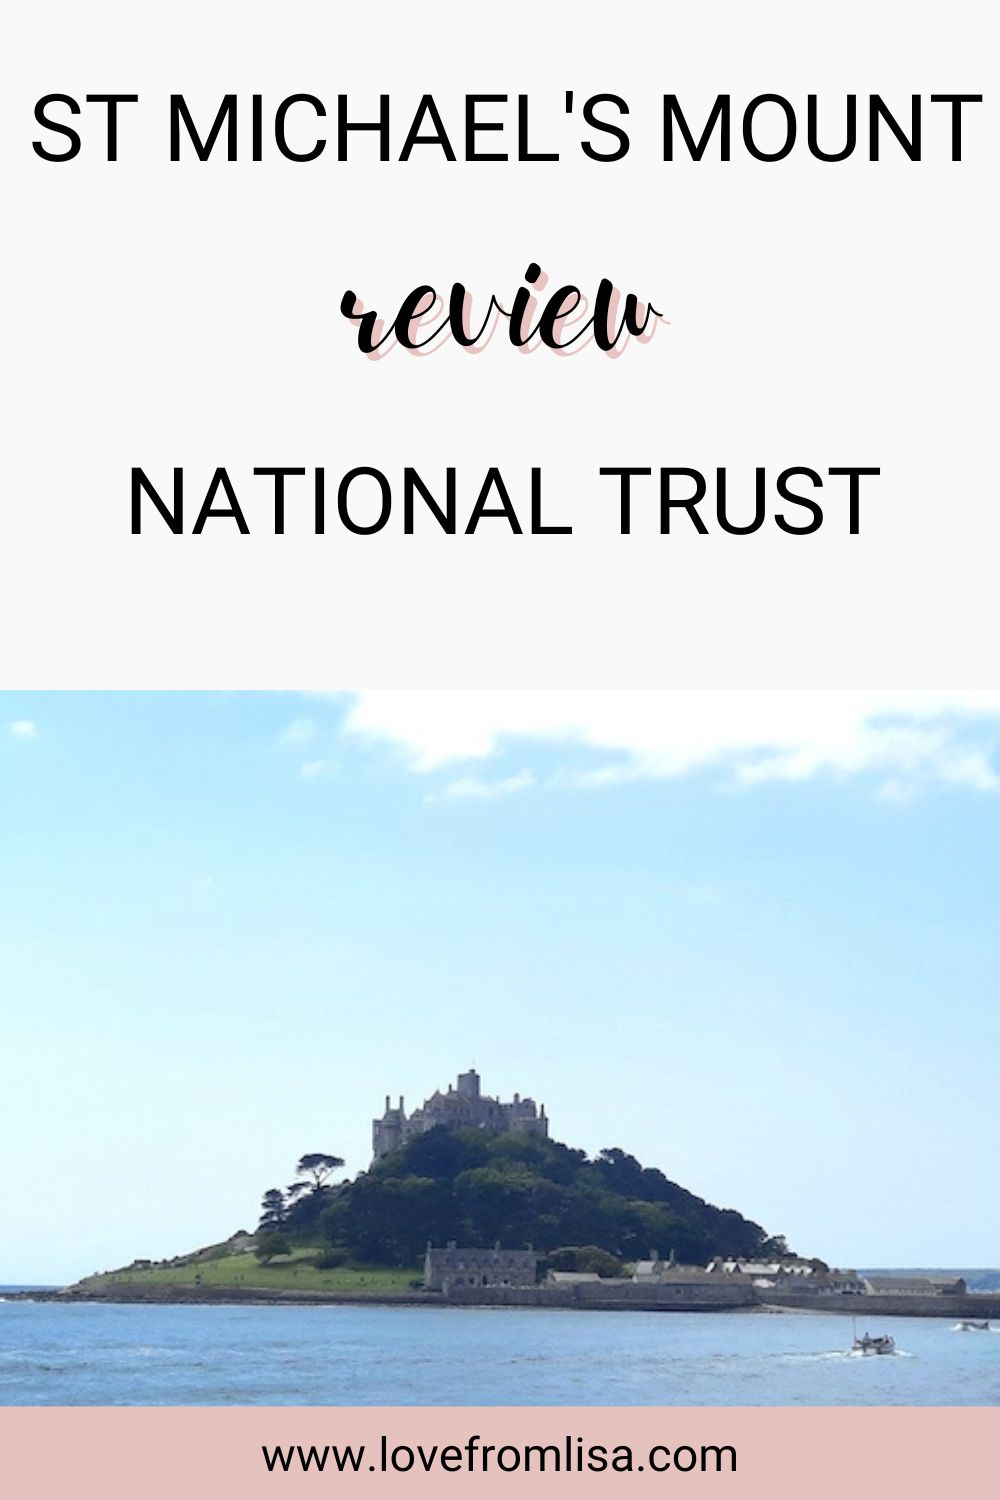 St Michael's Mount Review, National Trust Pinterest